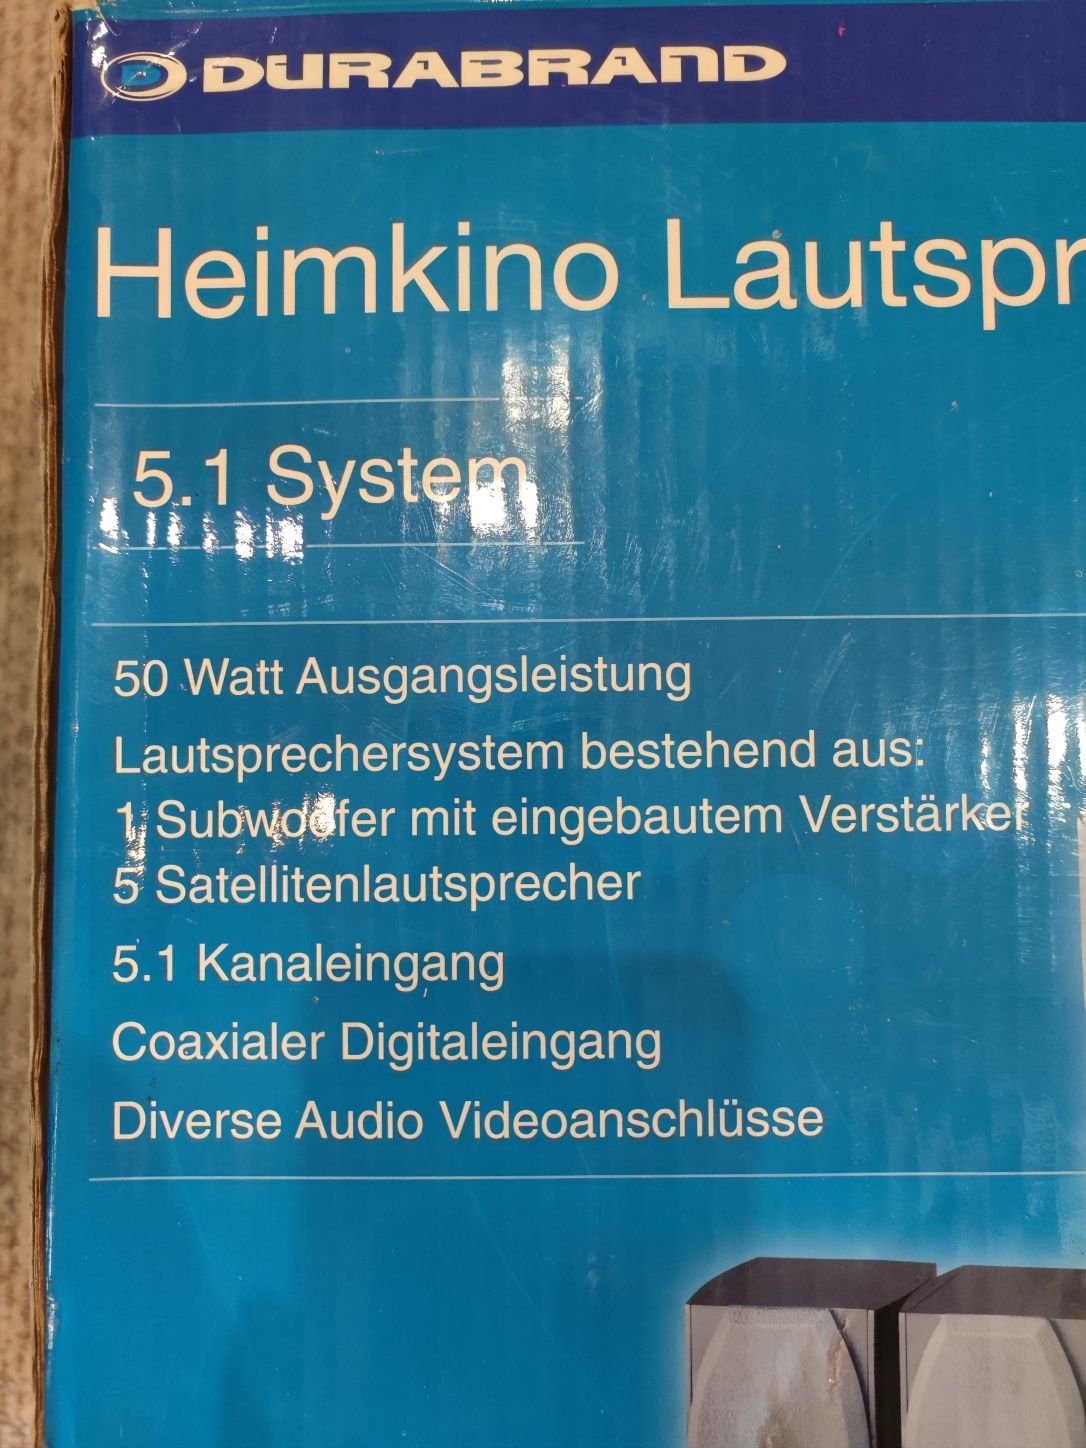 Акустична система DURABRAND Heimkino 5.1

Heimking Lautsprechersystem